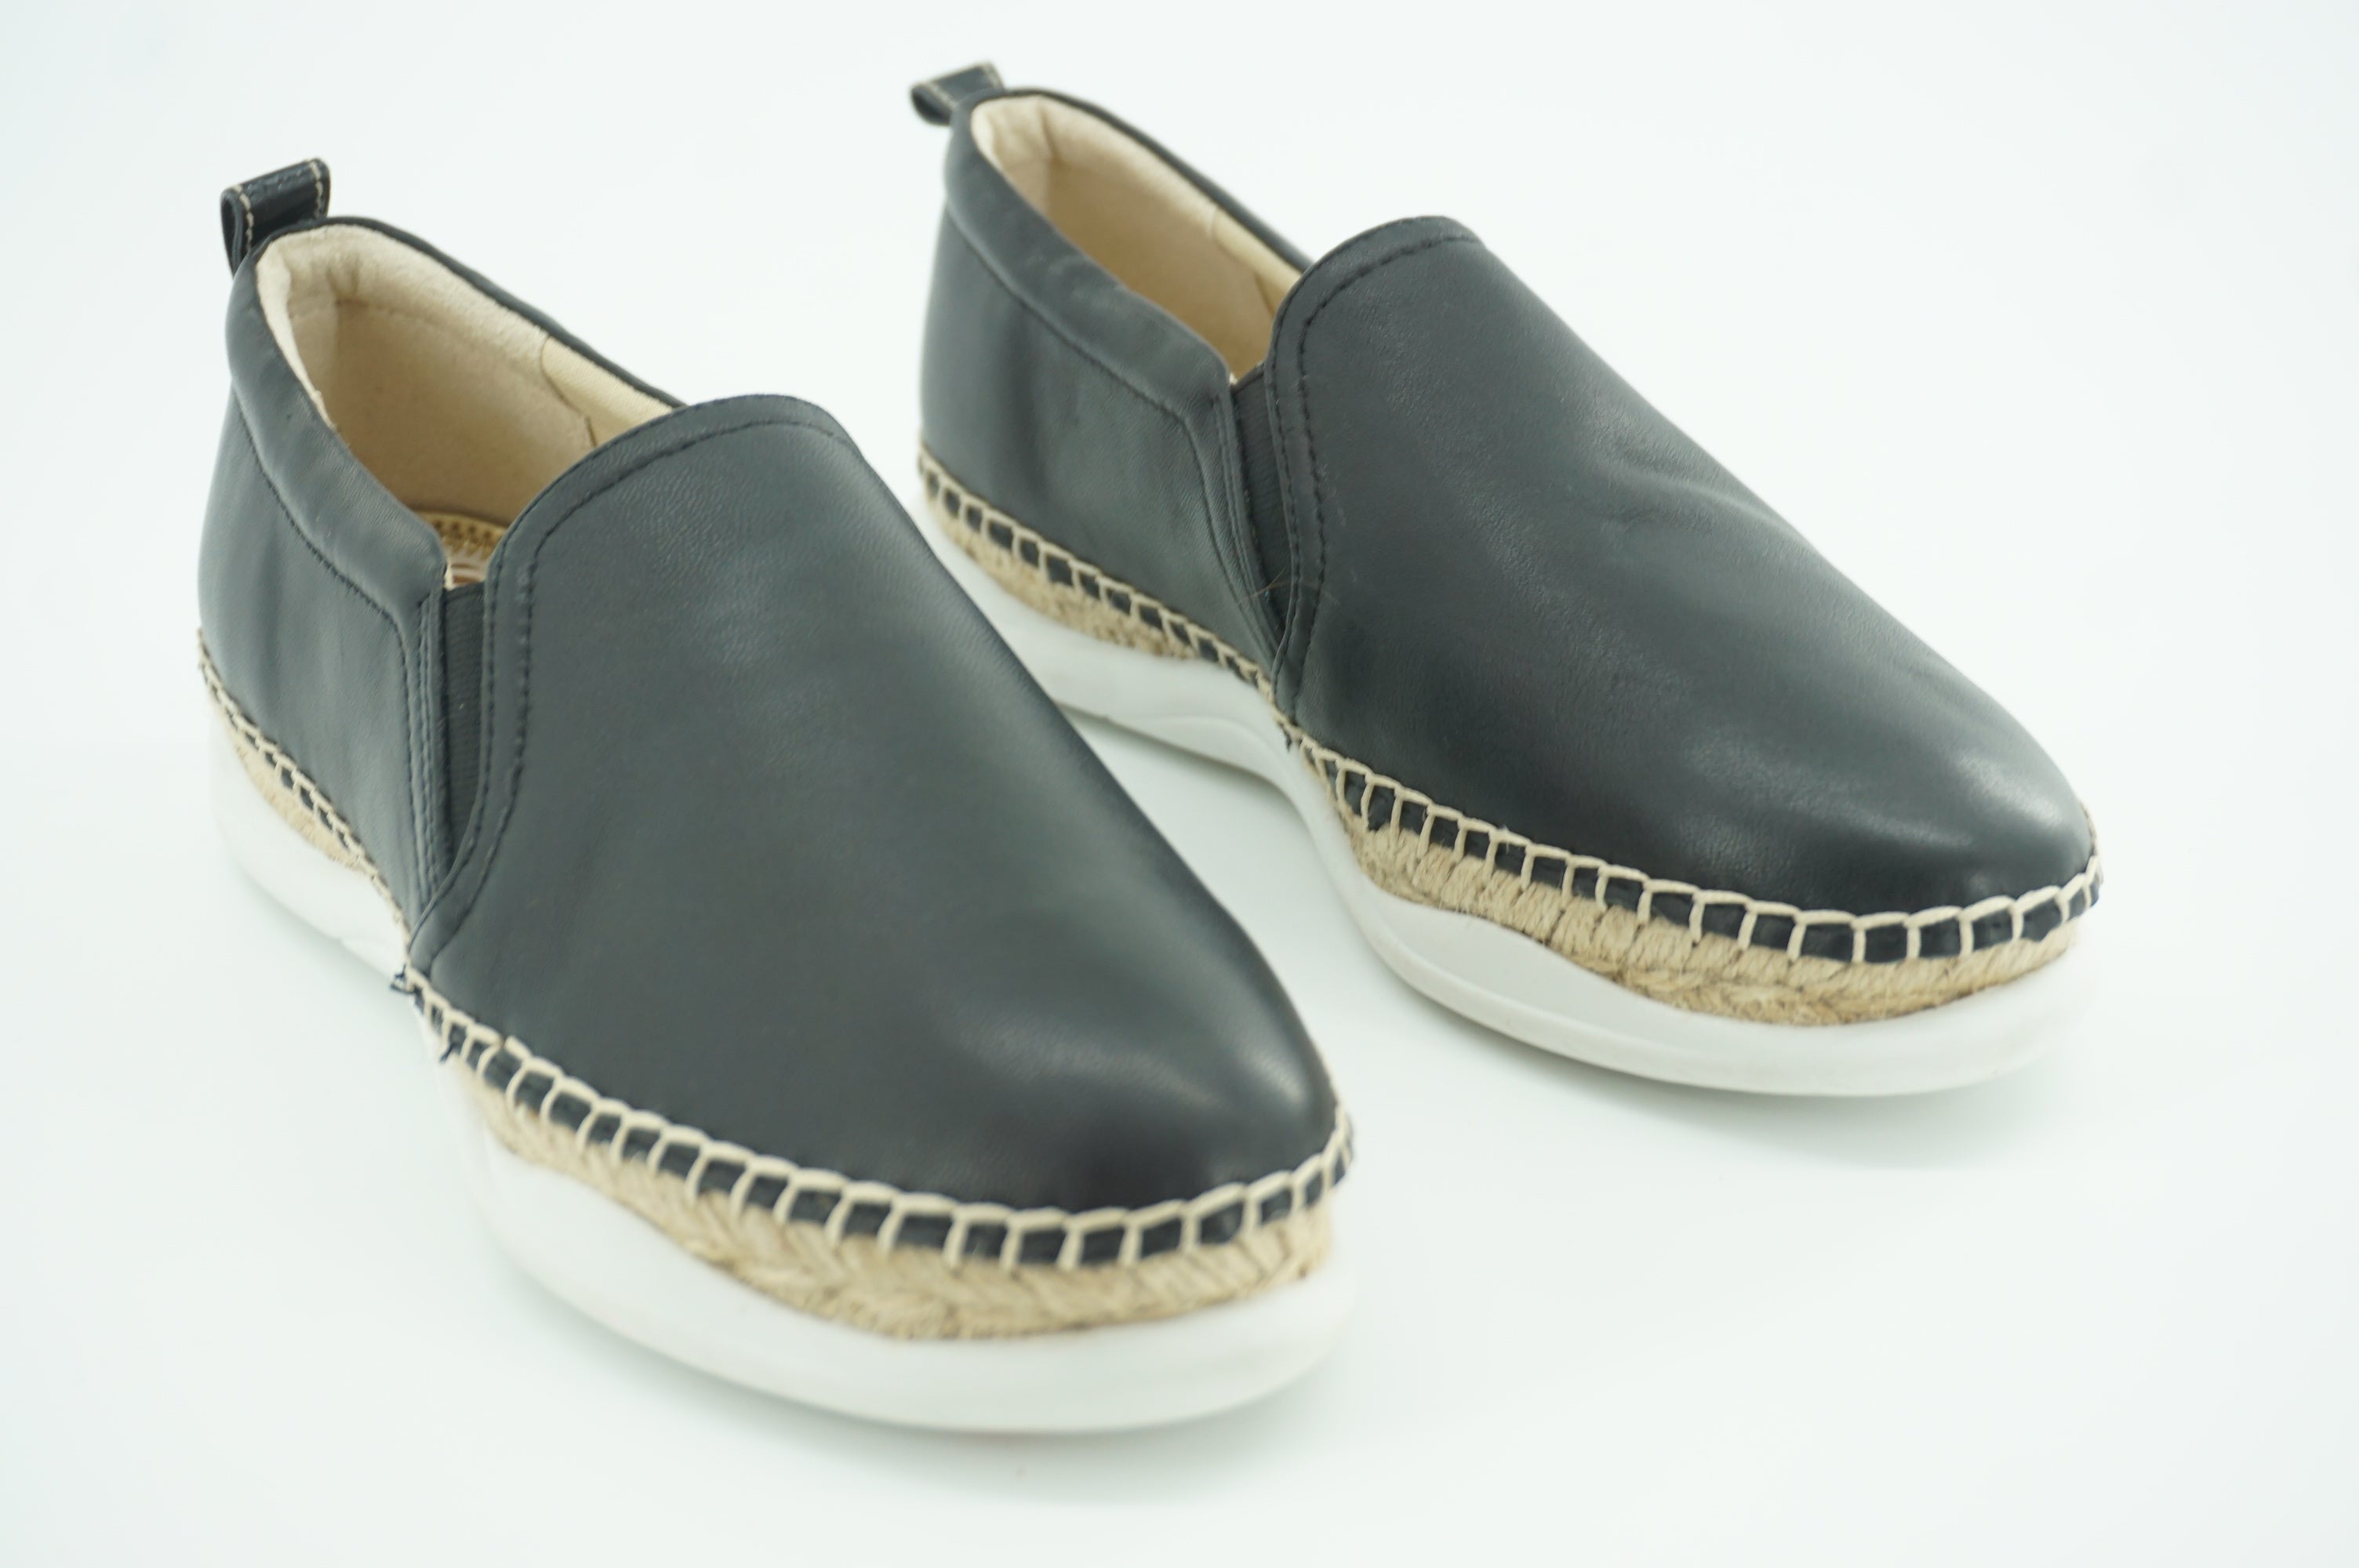 Sam Edelman Kassie Black Leather espadrille Flat Sneaker SZ 7 New $130